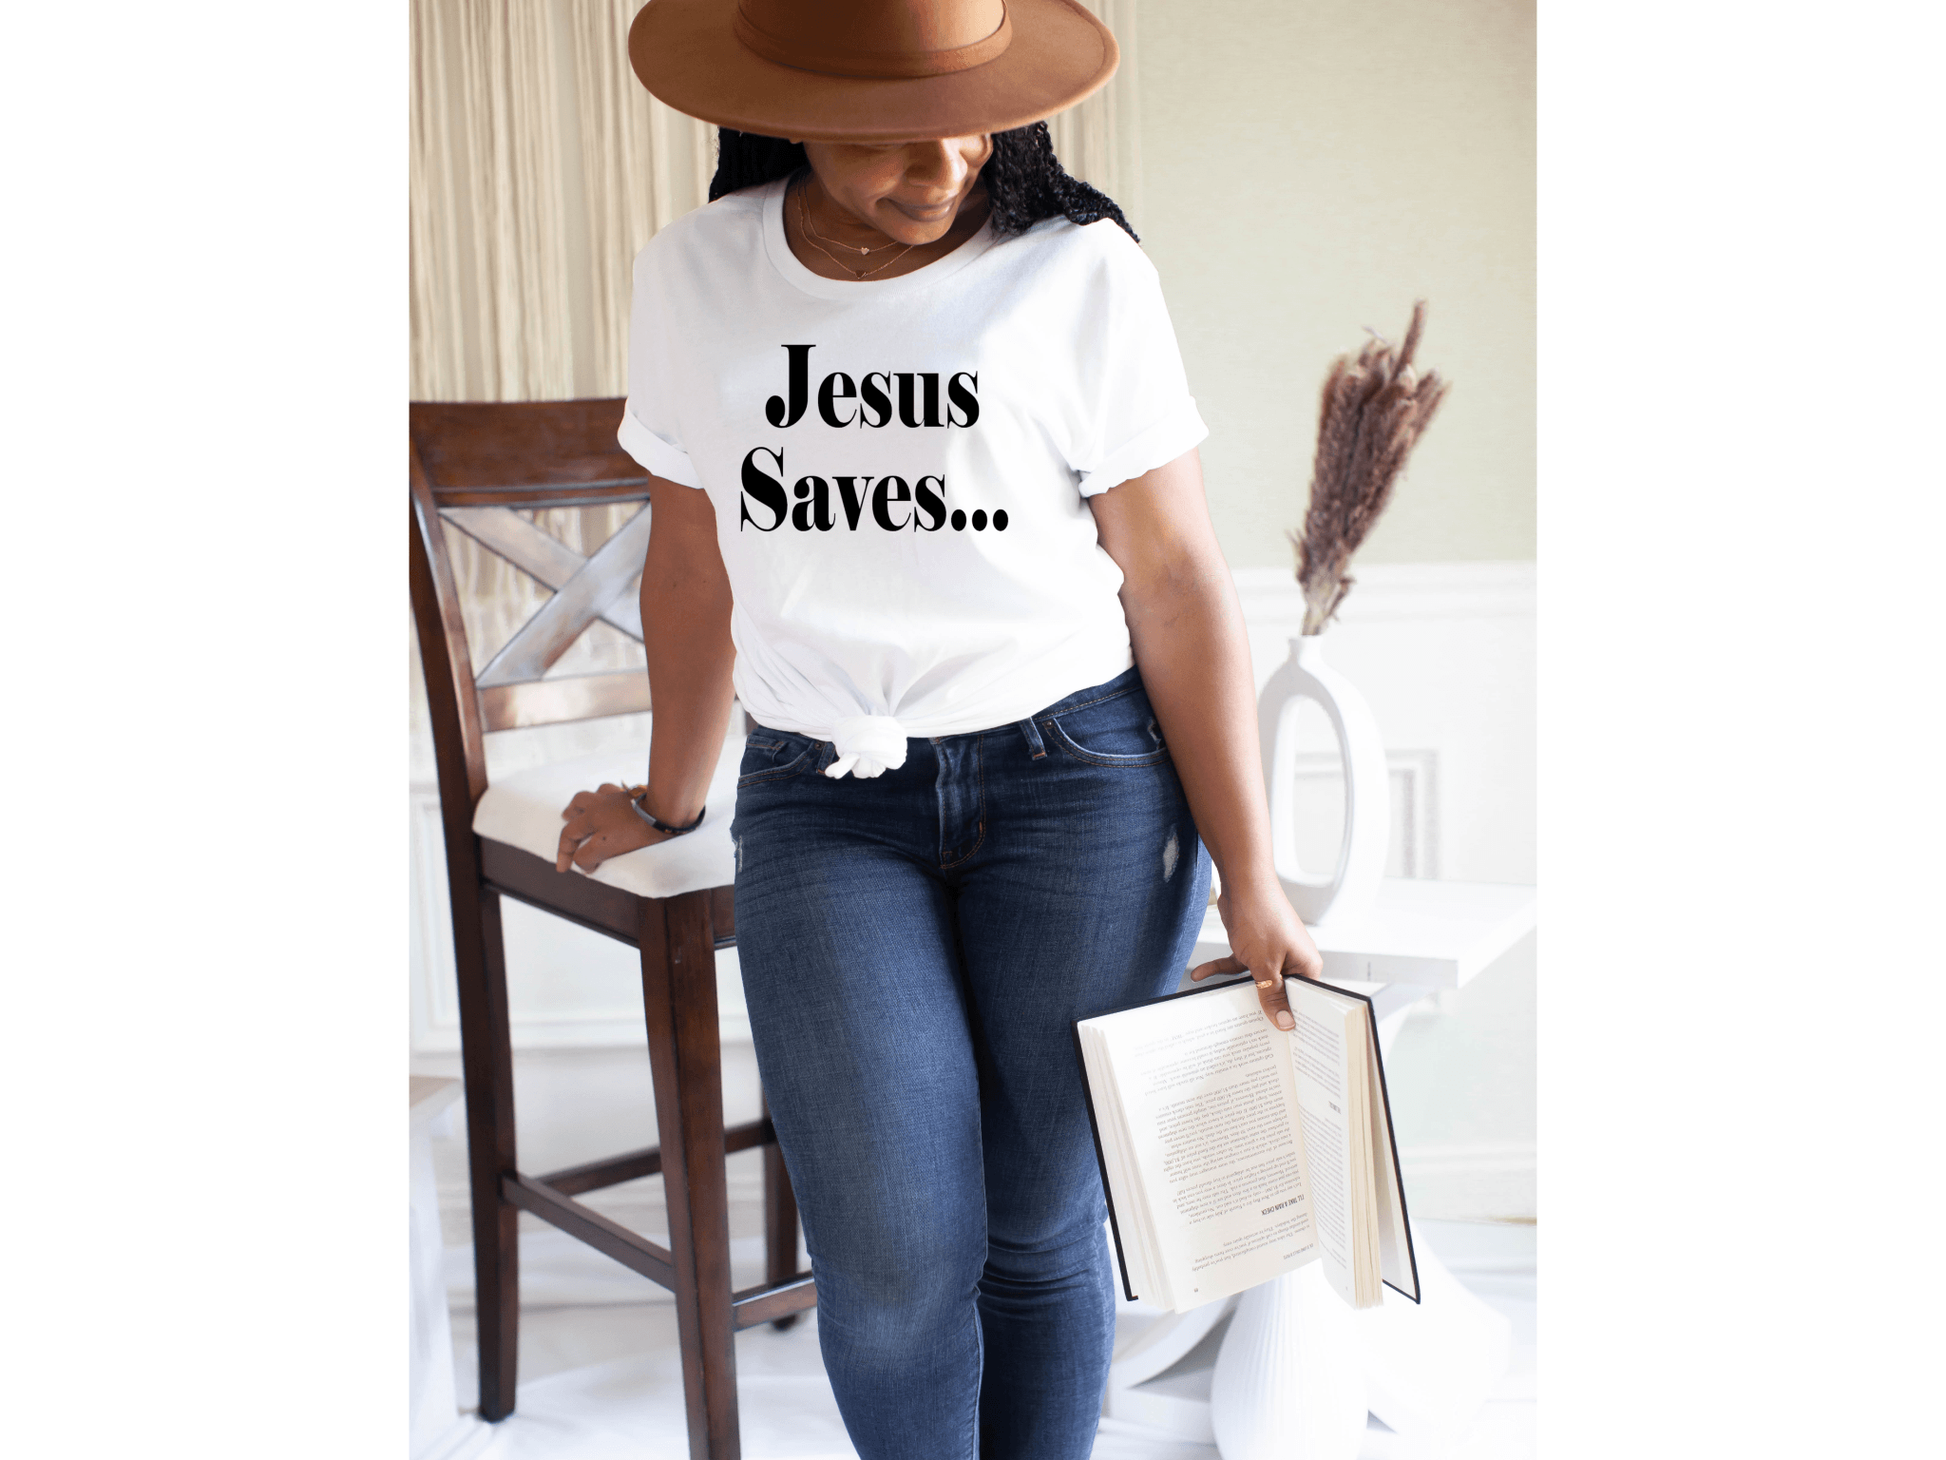 Jesus Saves Shirt, Religious Shirt for Women and Men, Jesus Gift, Religious Gift, Christian Shirt, - smuniqueshirts